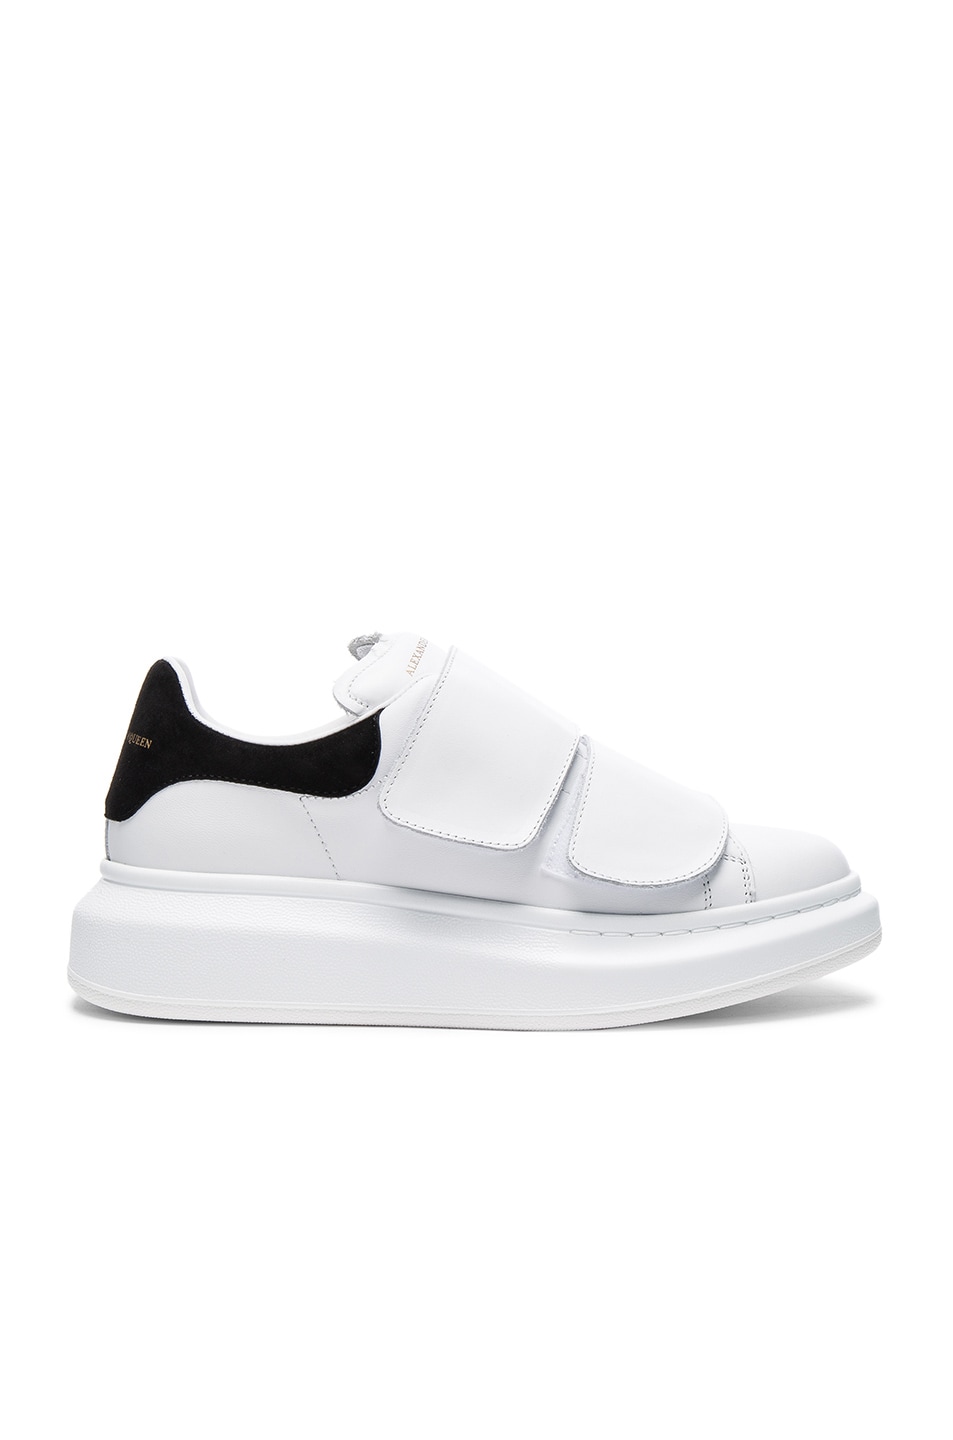 Image 1 of Alexander McQueen Velcro Platform Sneakers in White & Black